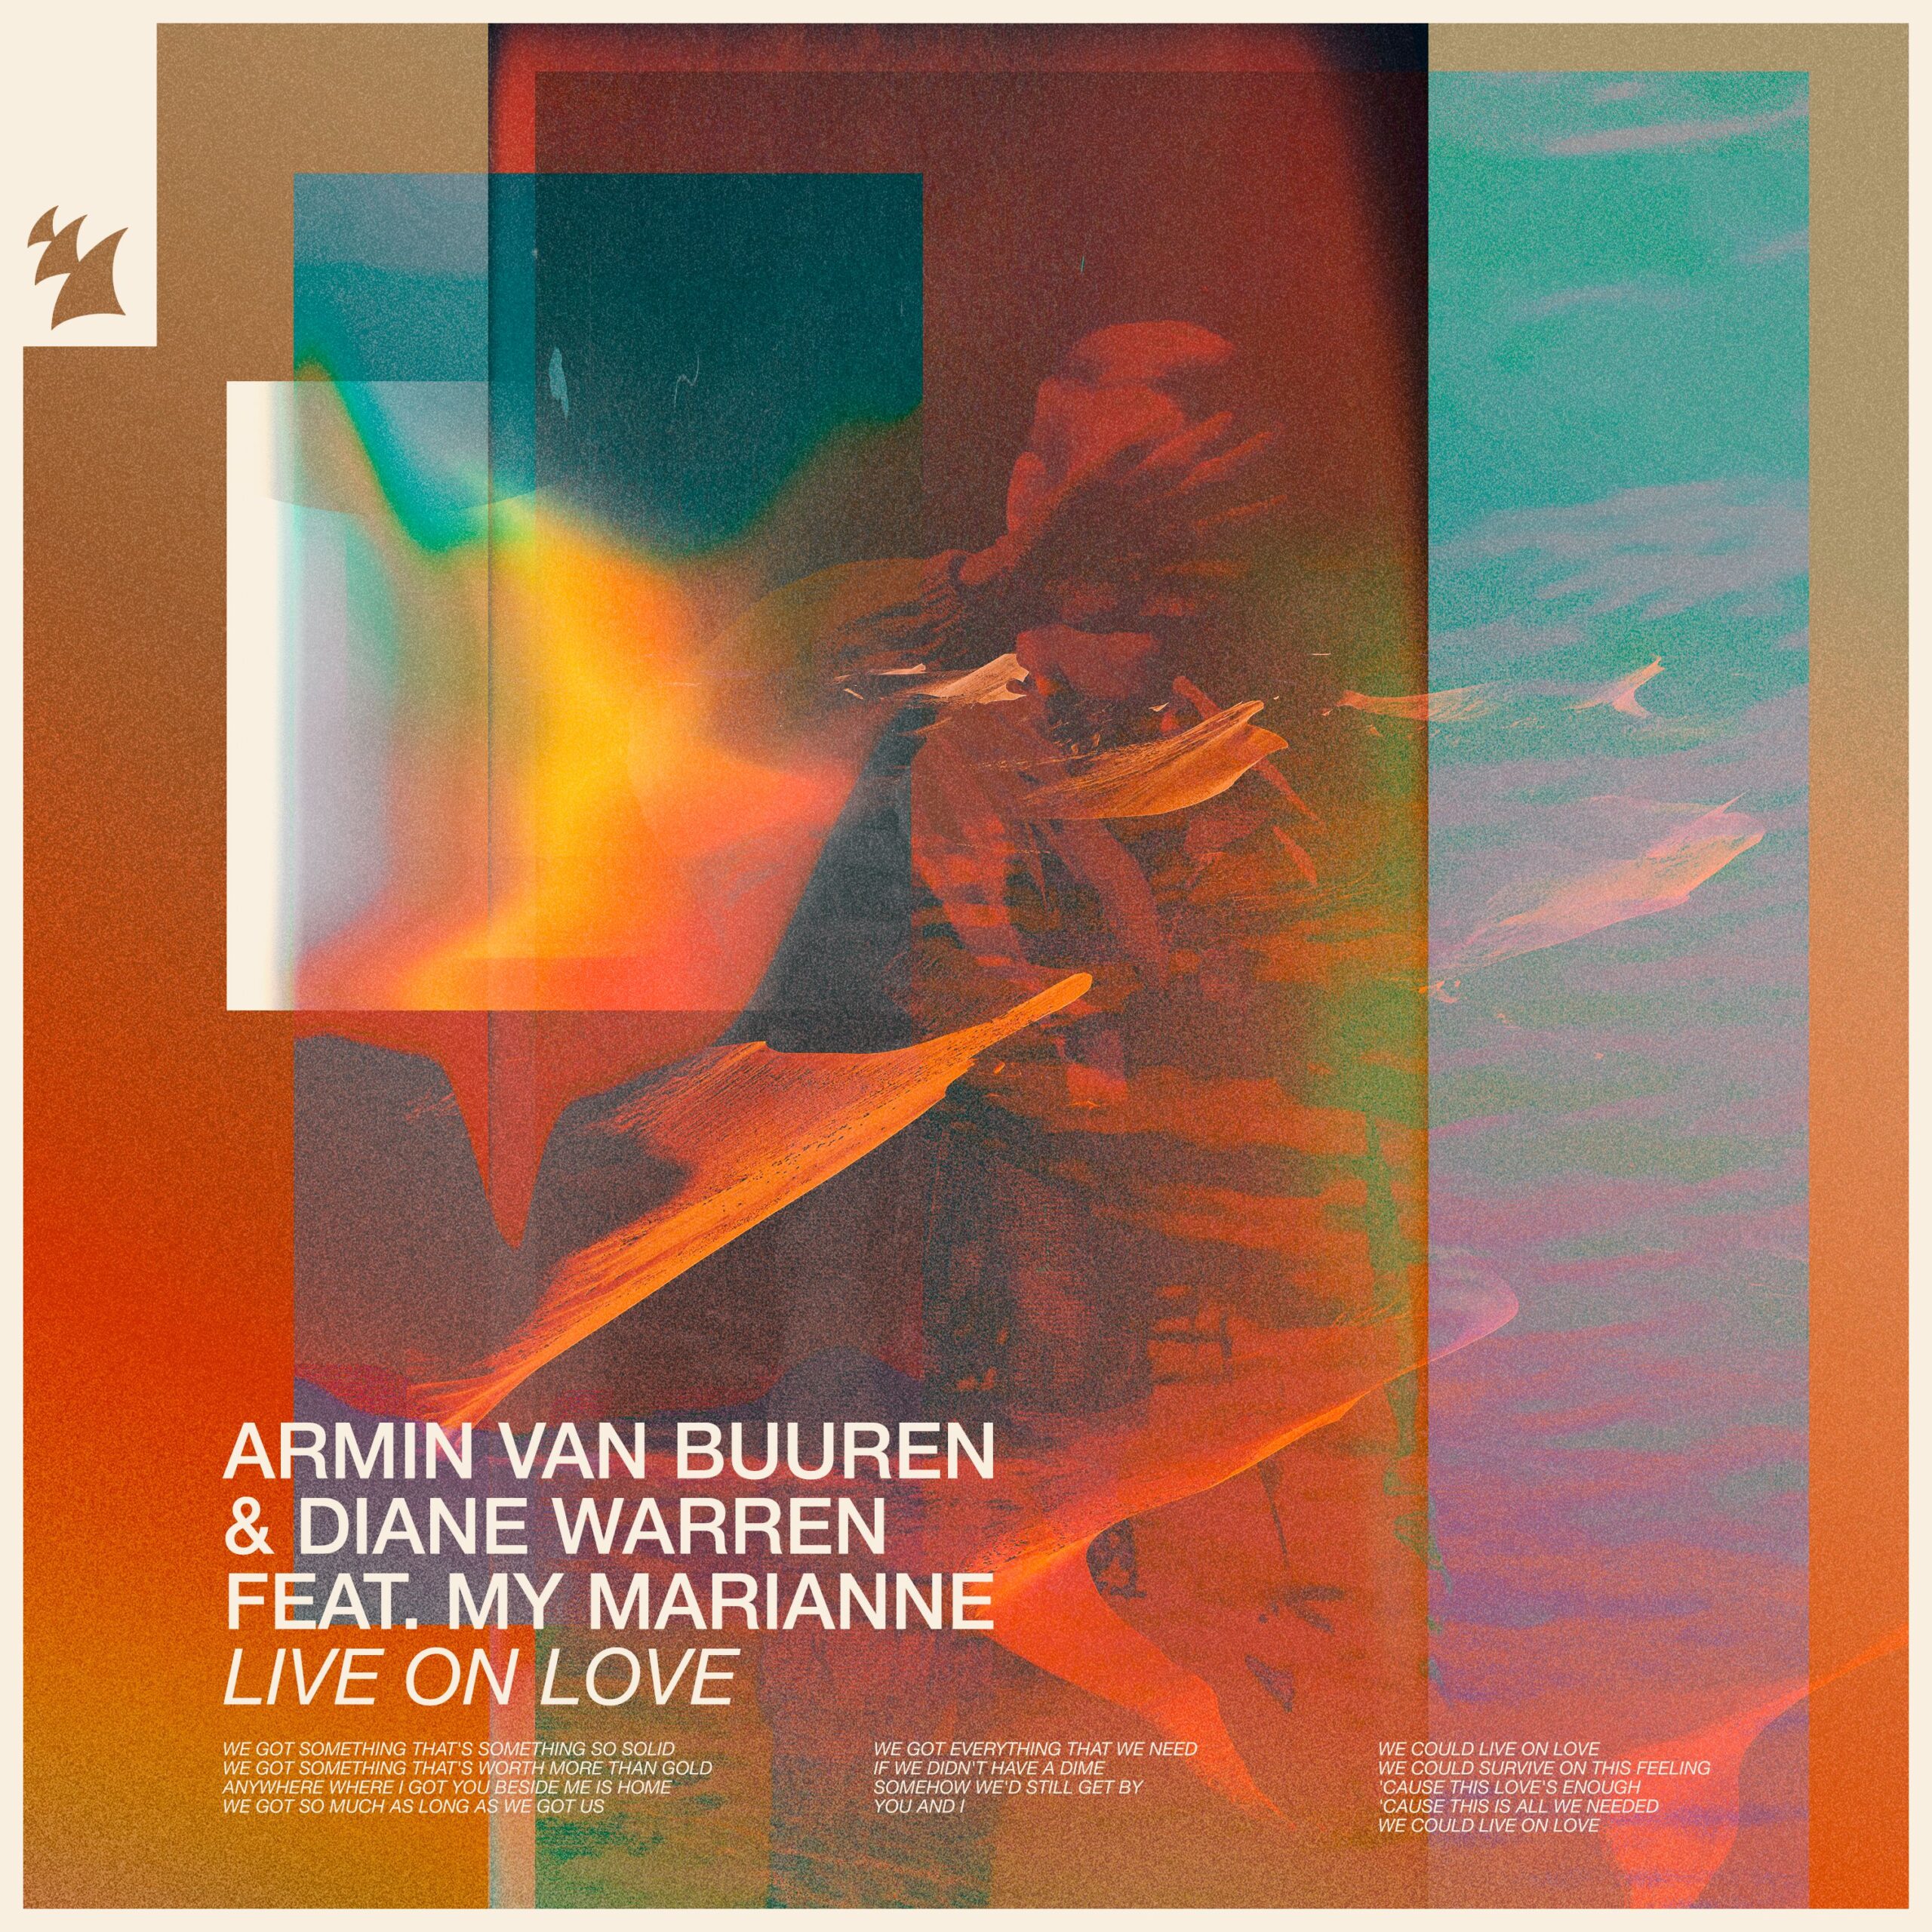 Armin van Buuren and Diane Warren feat. My Marianne presents Live On Love on Armada Music